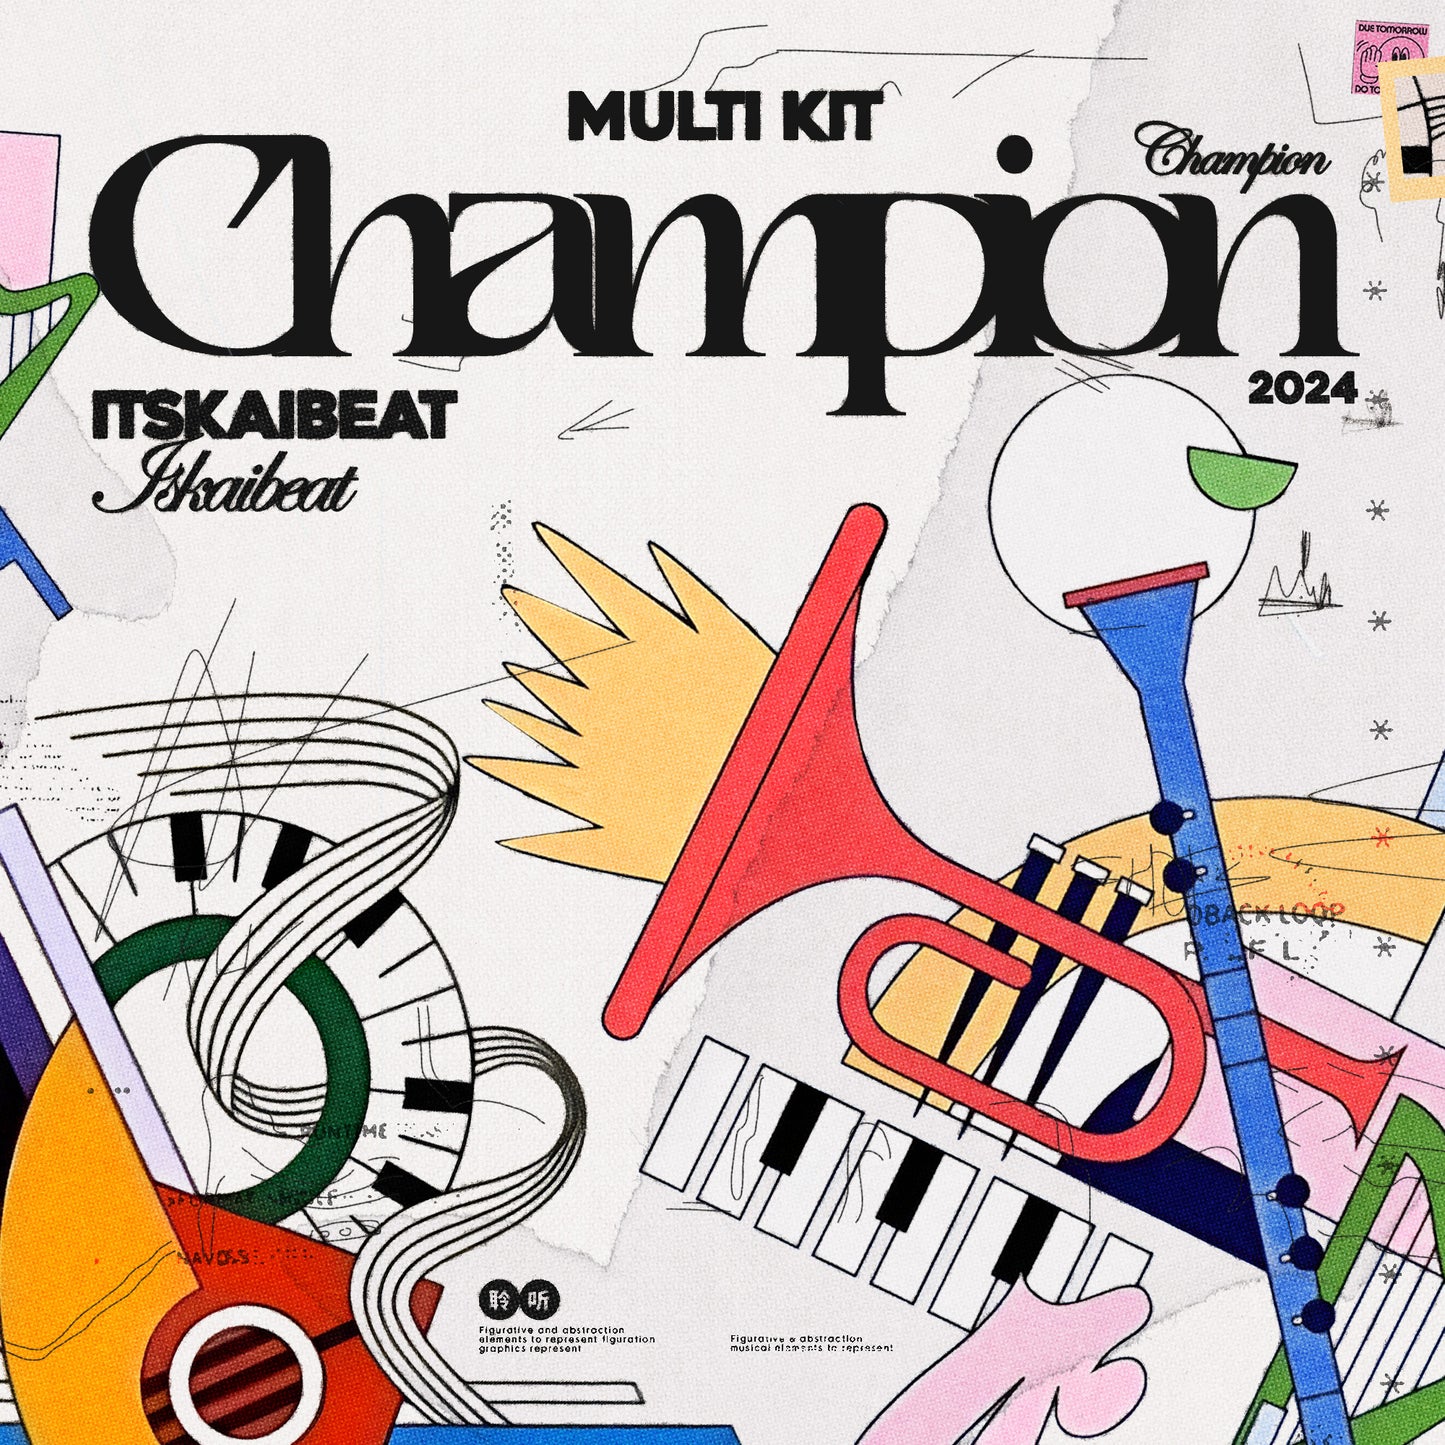 🏆 The "Champions" Multi Kit